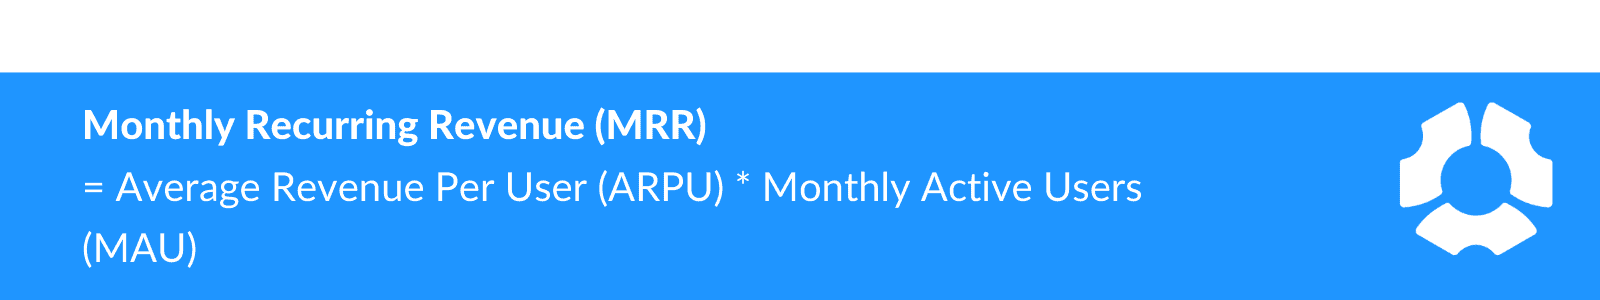 Monthly recurring revenue (MRR) formula